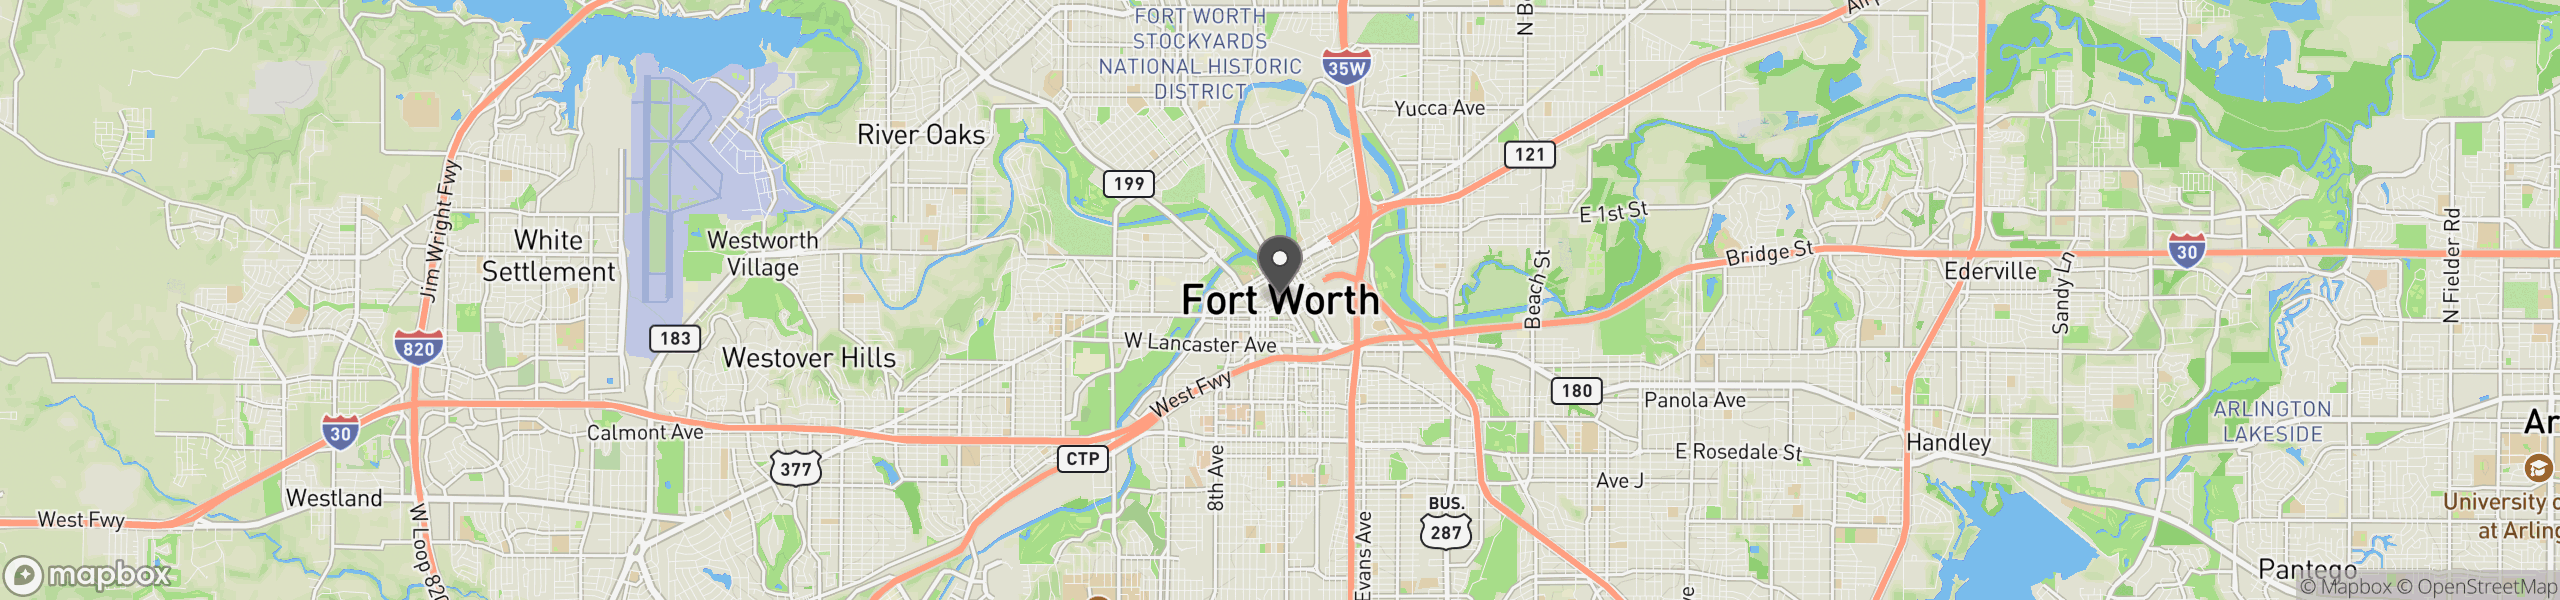 Fort Worth, TX 76161